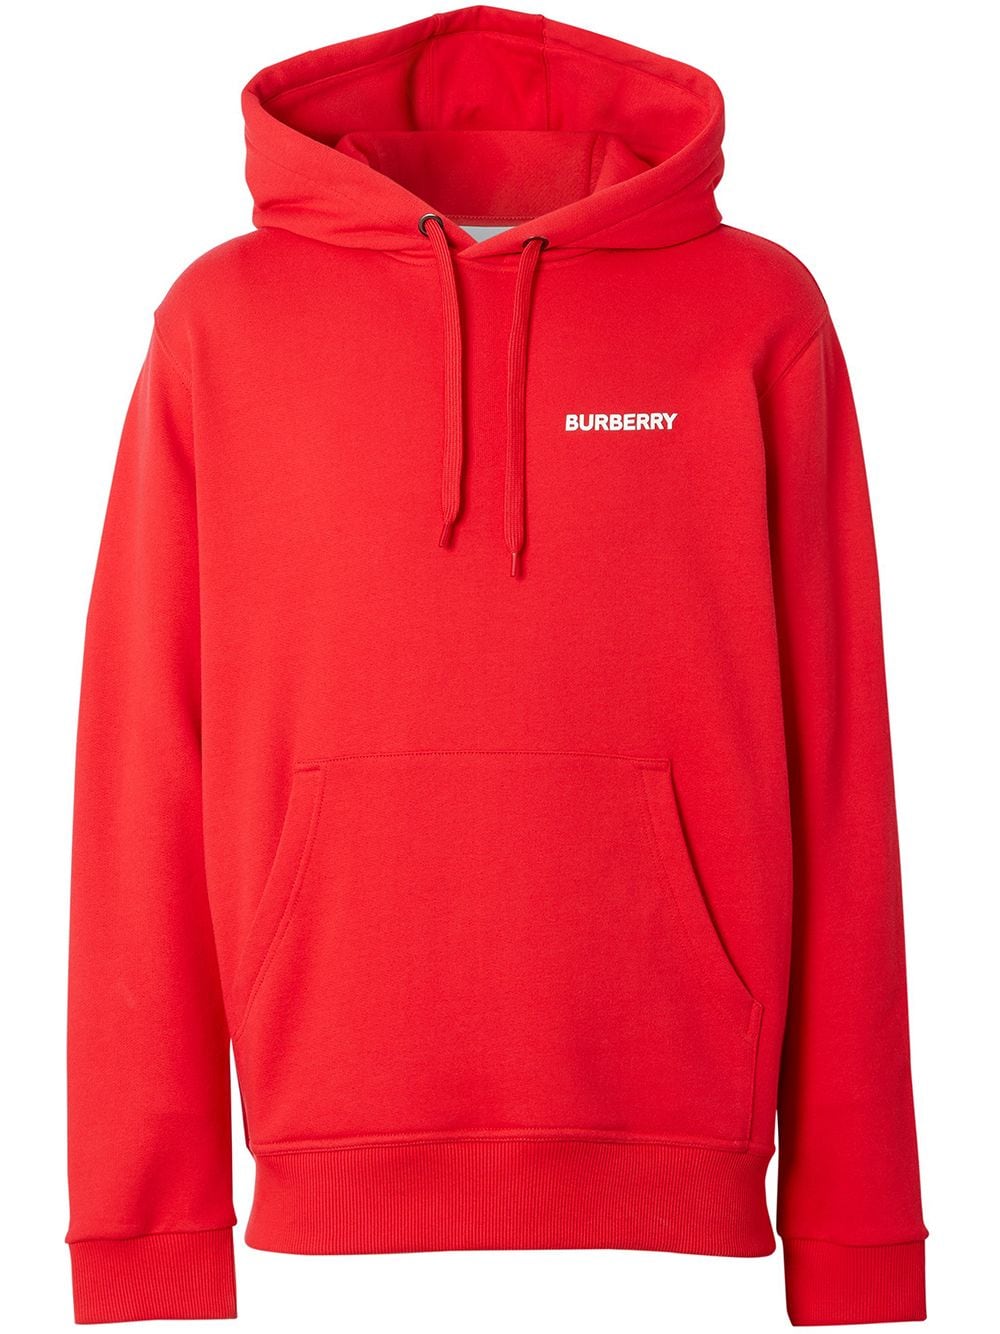 Burberry montage print hooded sweatshirt - Red